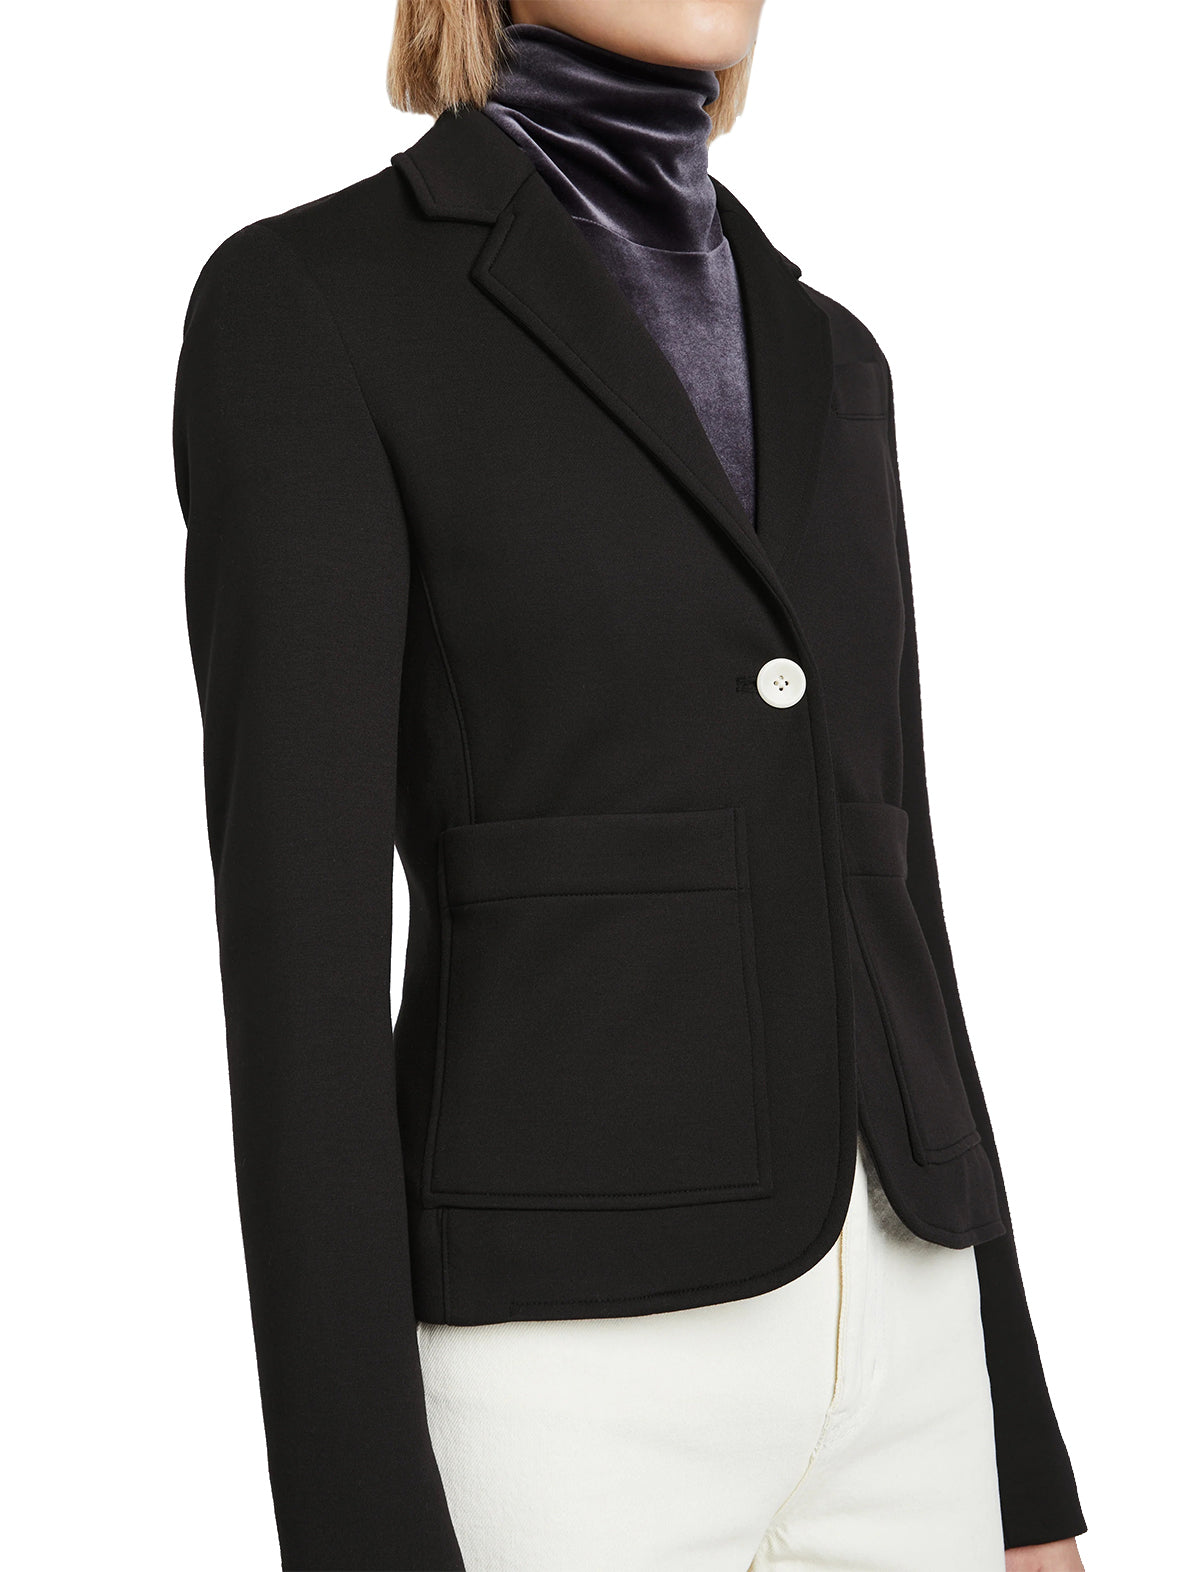 PROENZA SCHOULER WHITE LABEL Jersey Suiting Blazer in Black